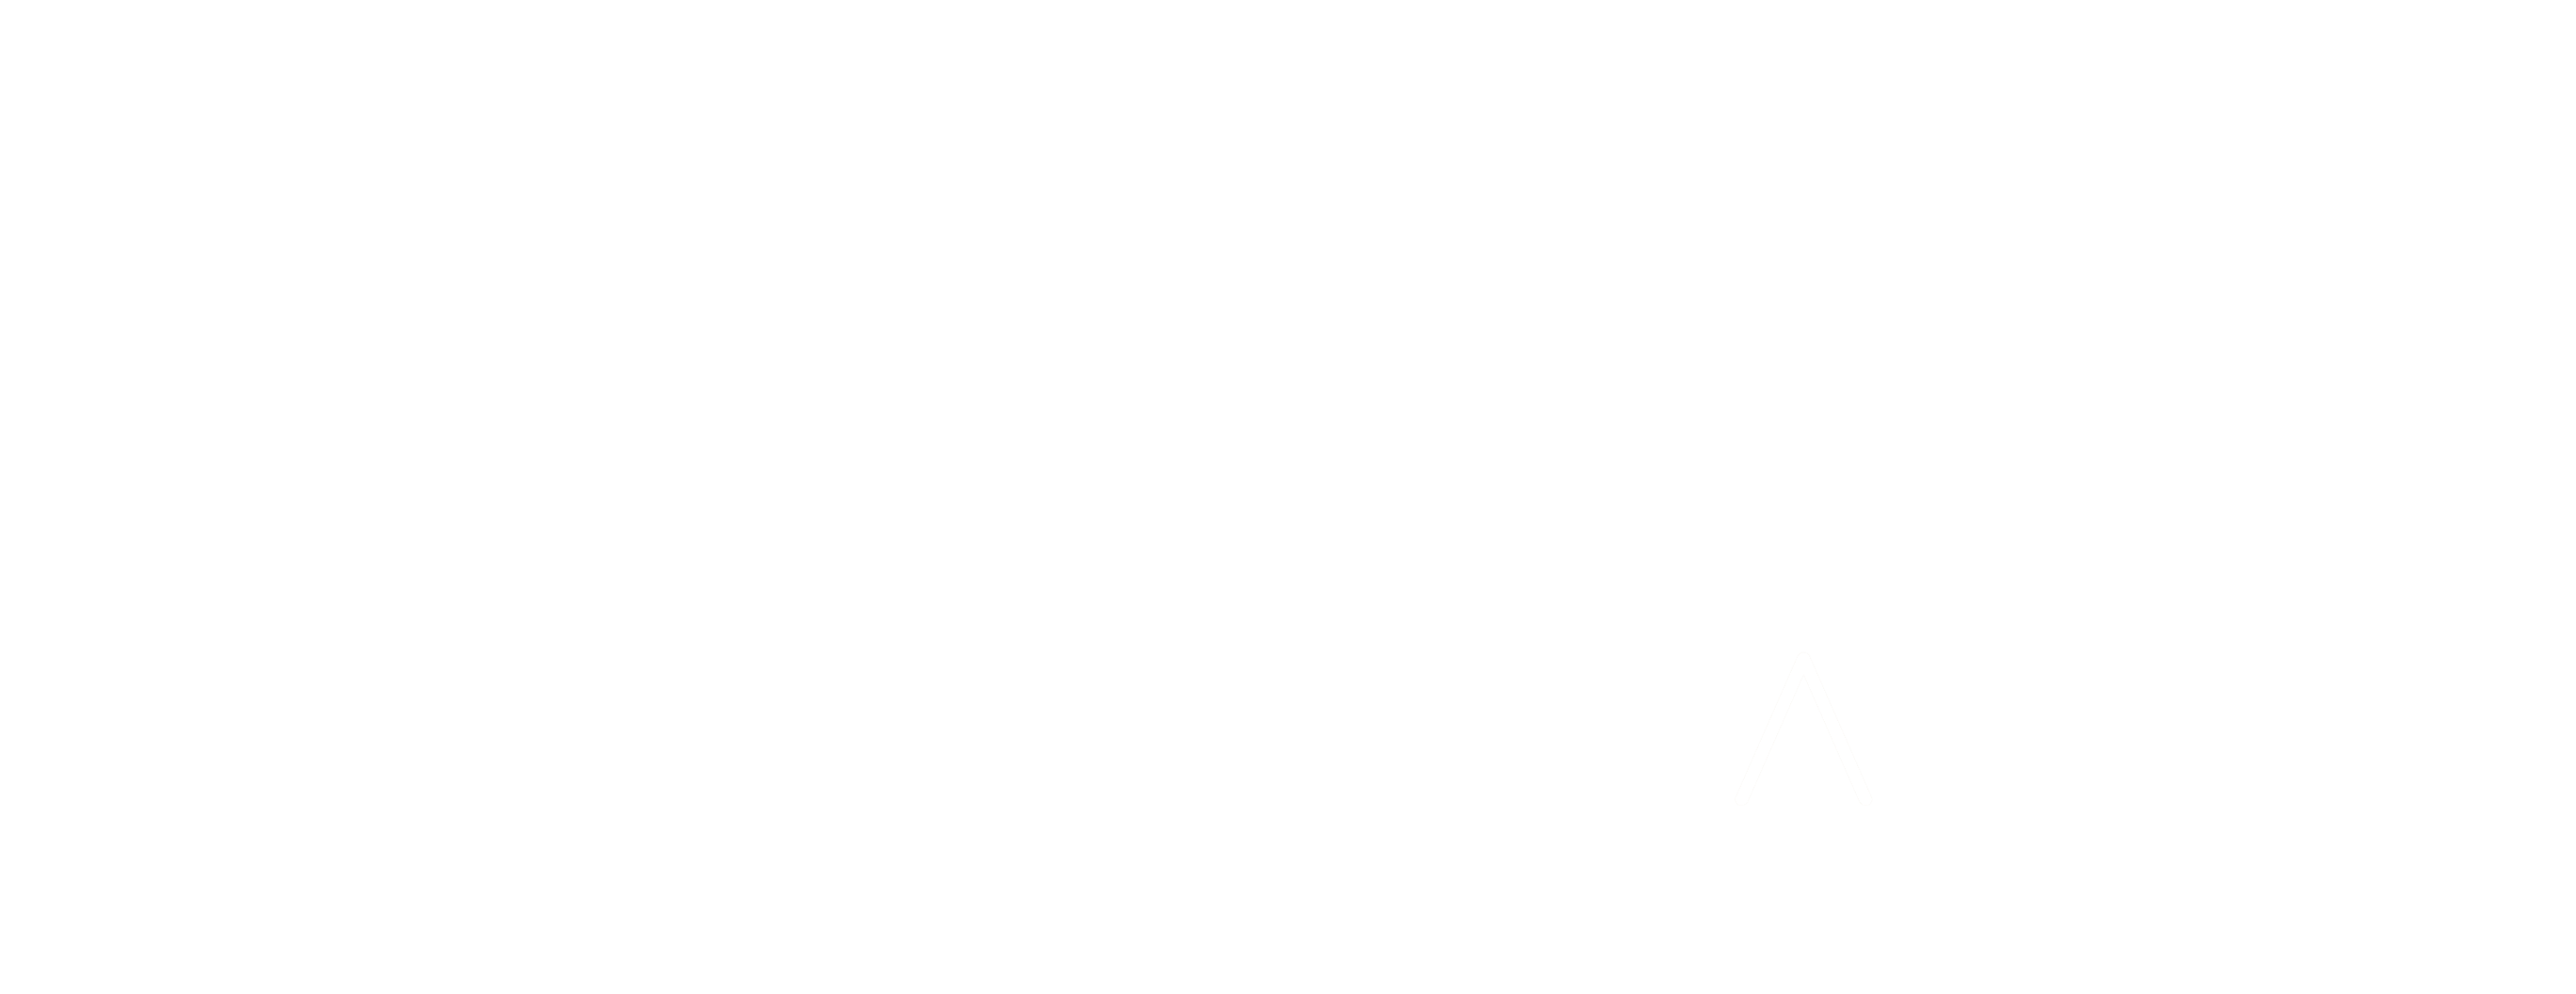 URBAN's Lounge Restaurant